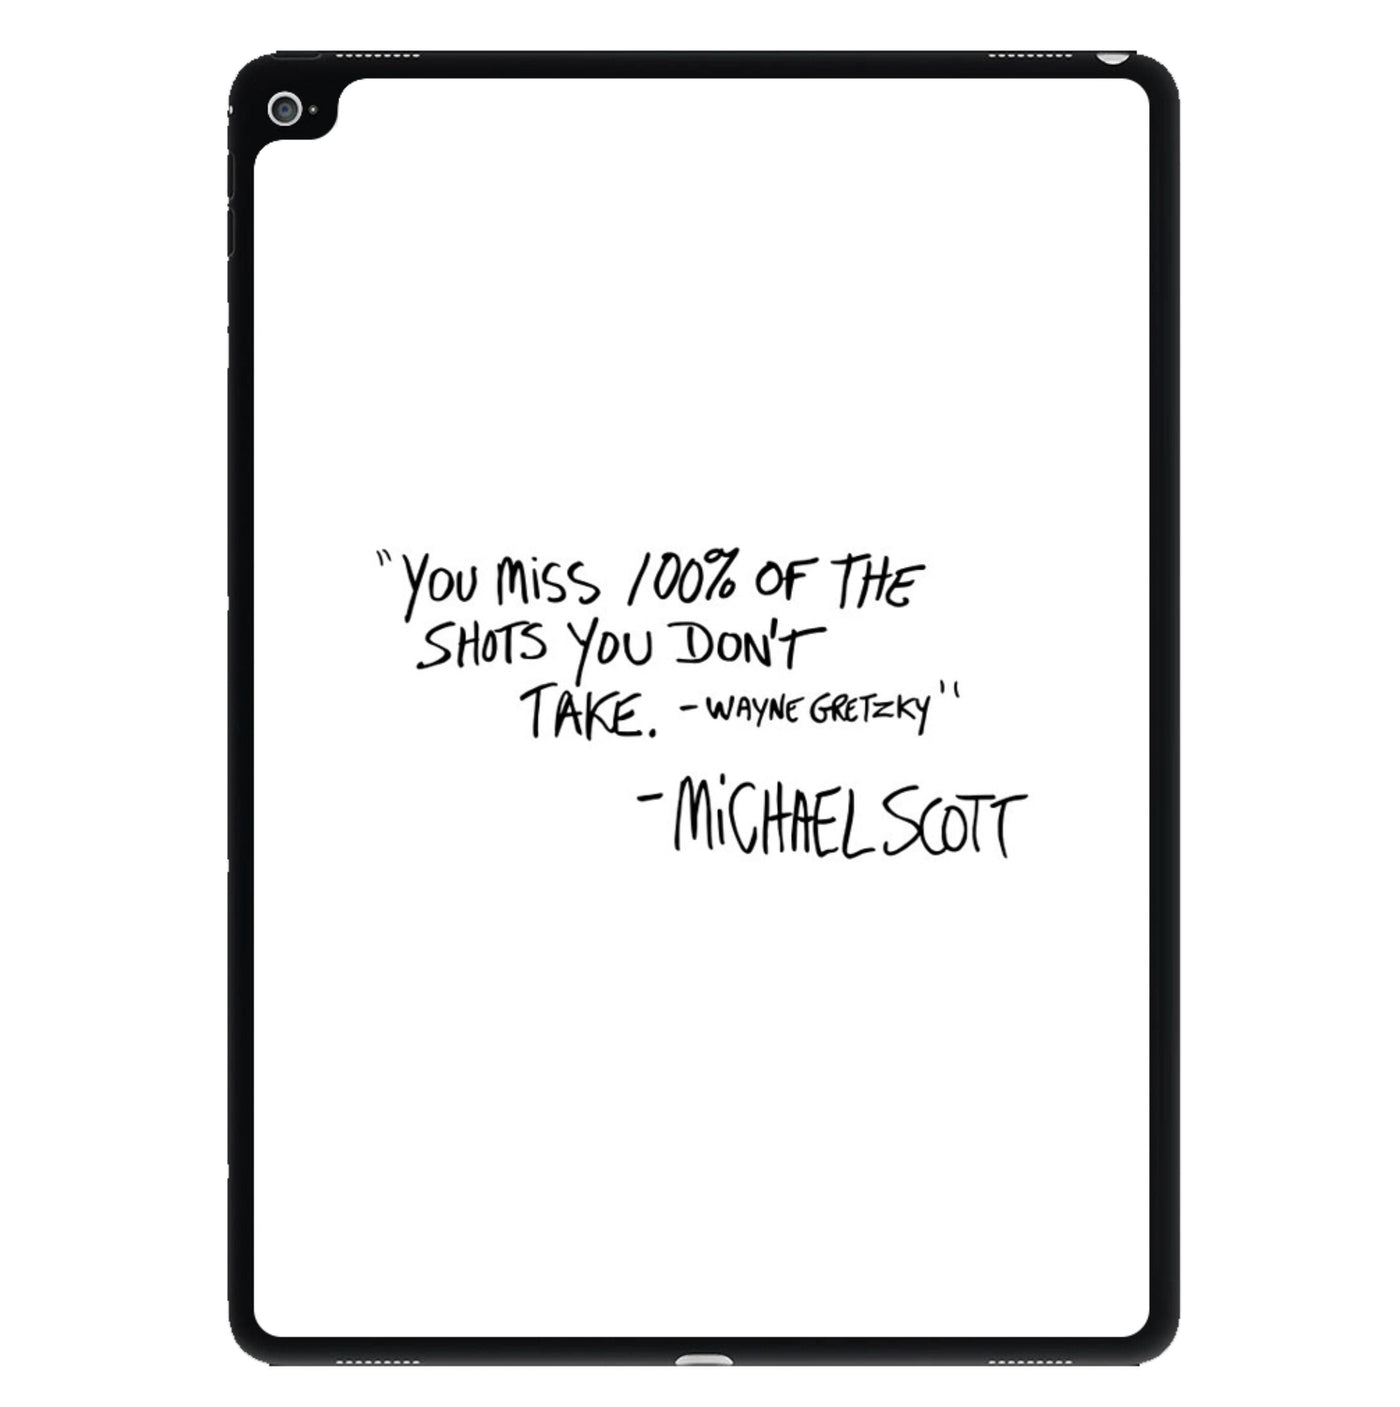 Michael Scott Quote - The Office iPad Case